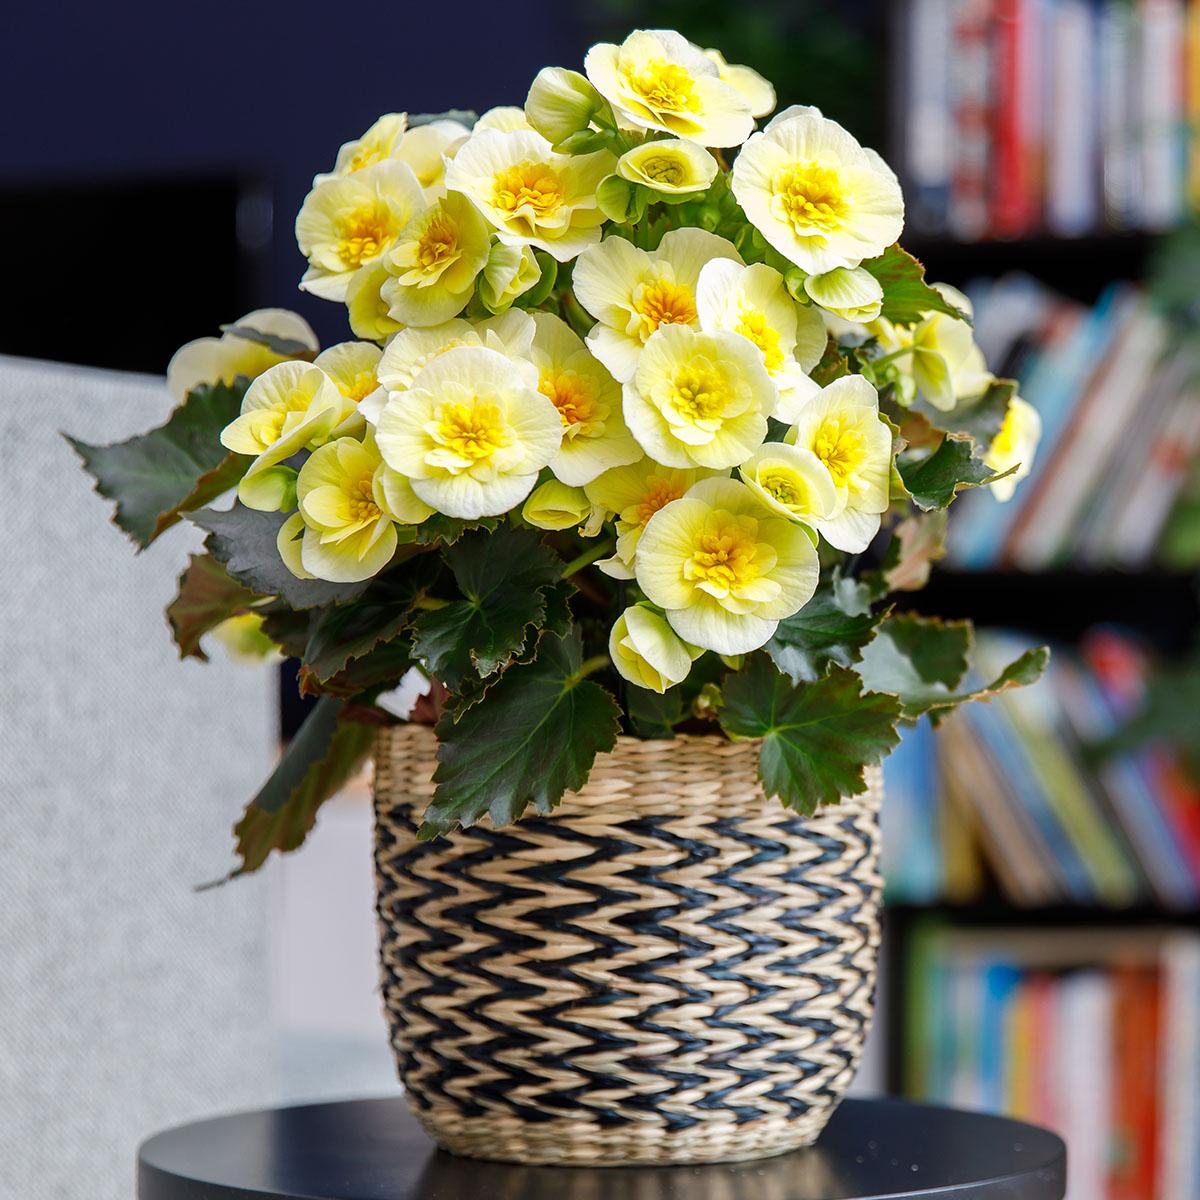 begonia-belove-lets-you-choose-indoor-or-outdoor-featured